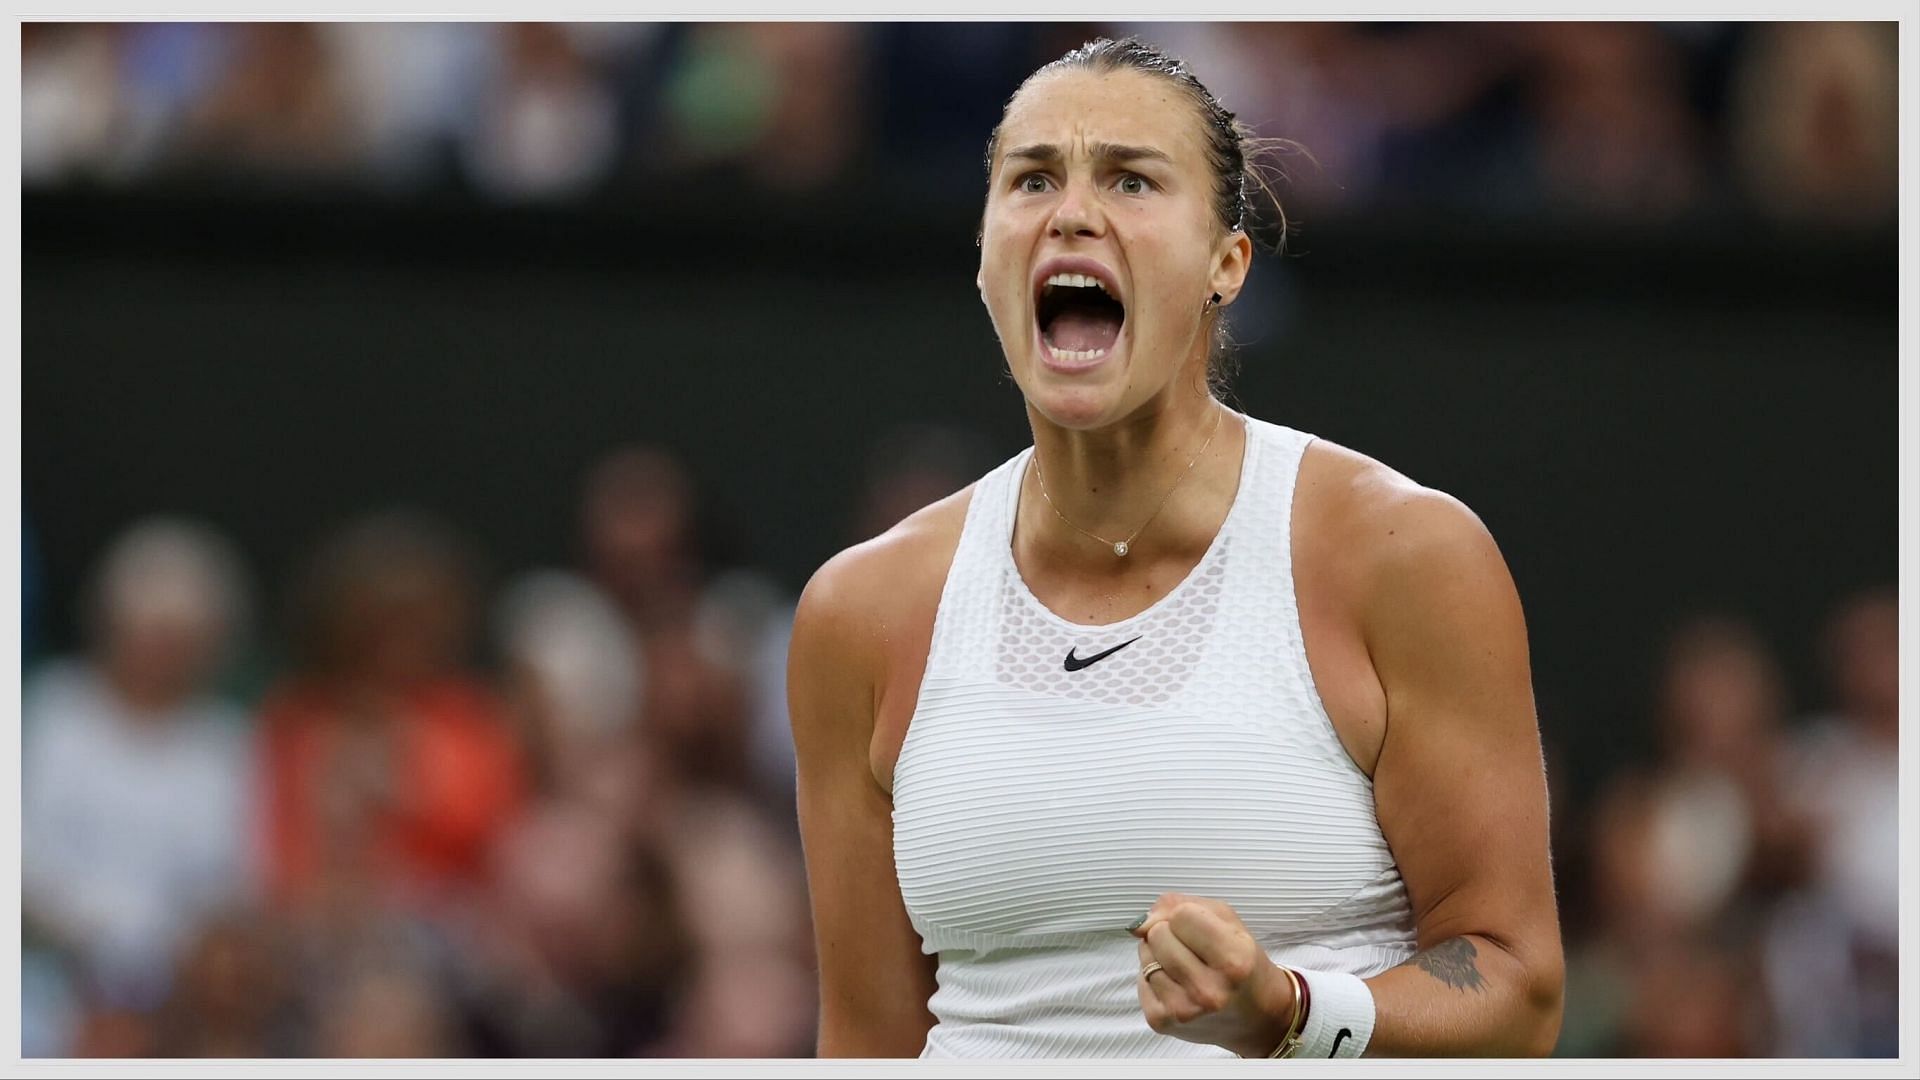 Aryna Sabalenka shares encouraging update on shoulder injury as she gears up for return after Wimbledon heartbreak